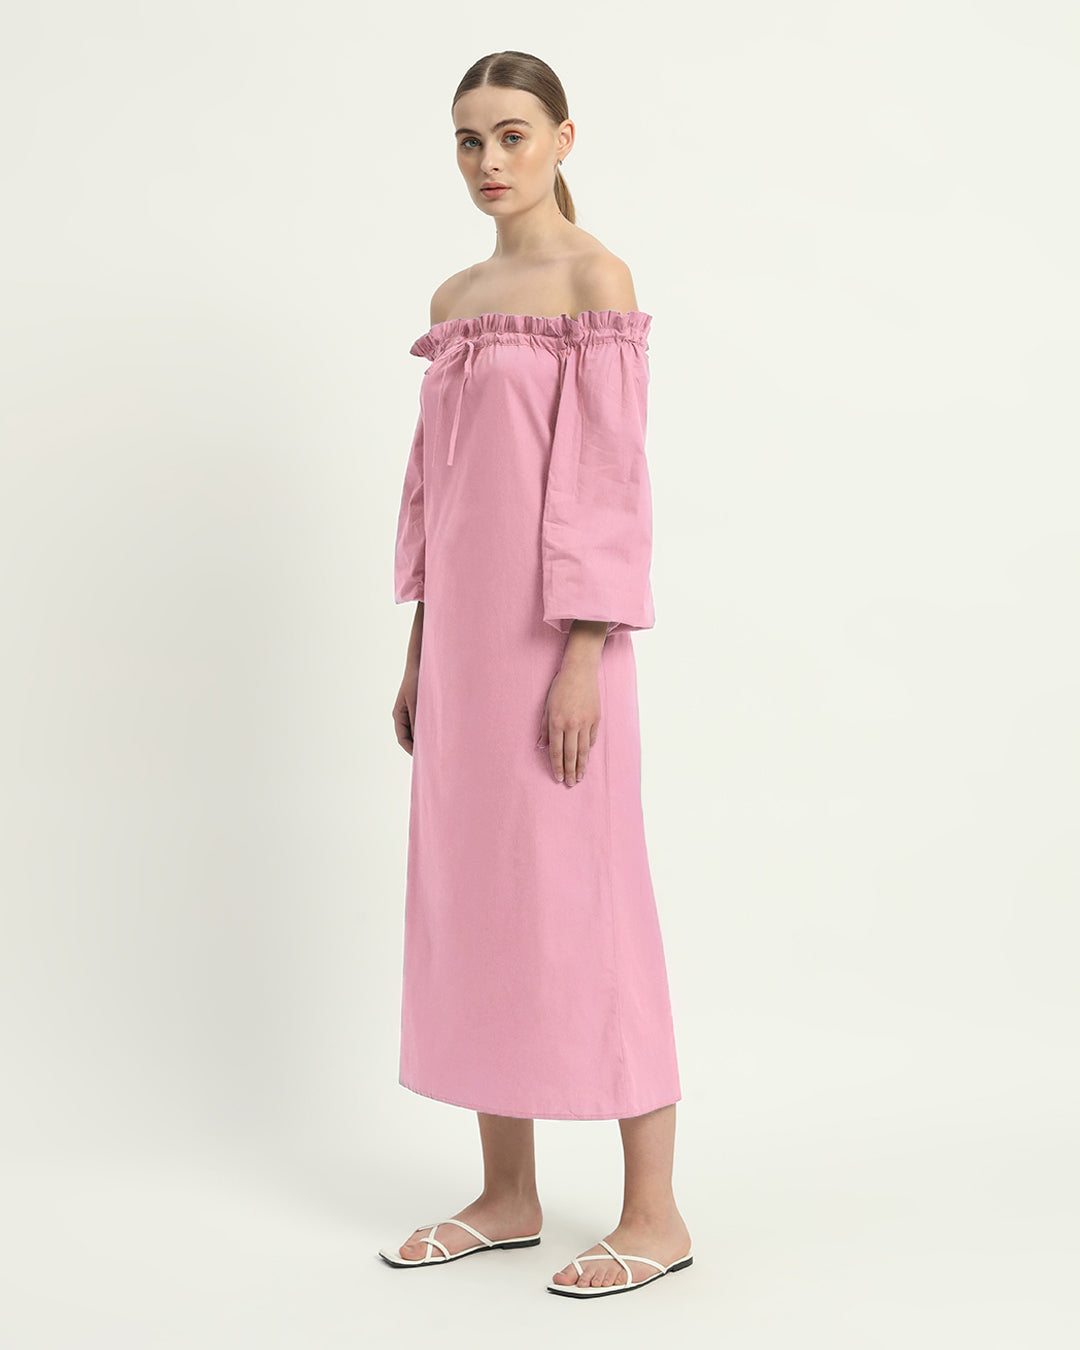 The Carlisle Fondant Pink Cotton Dress